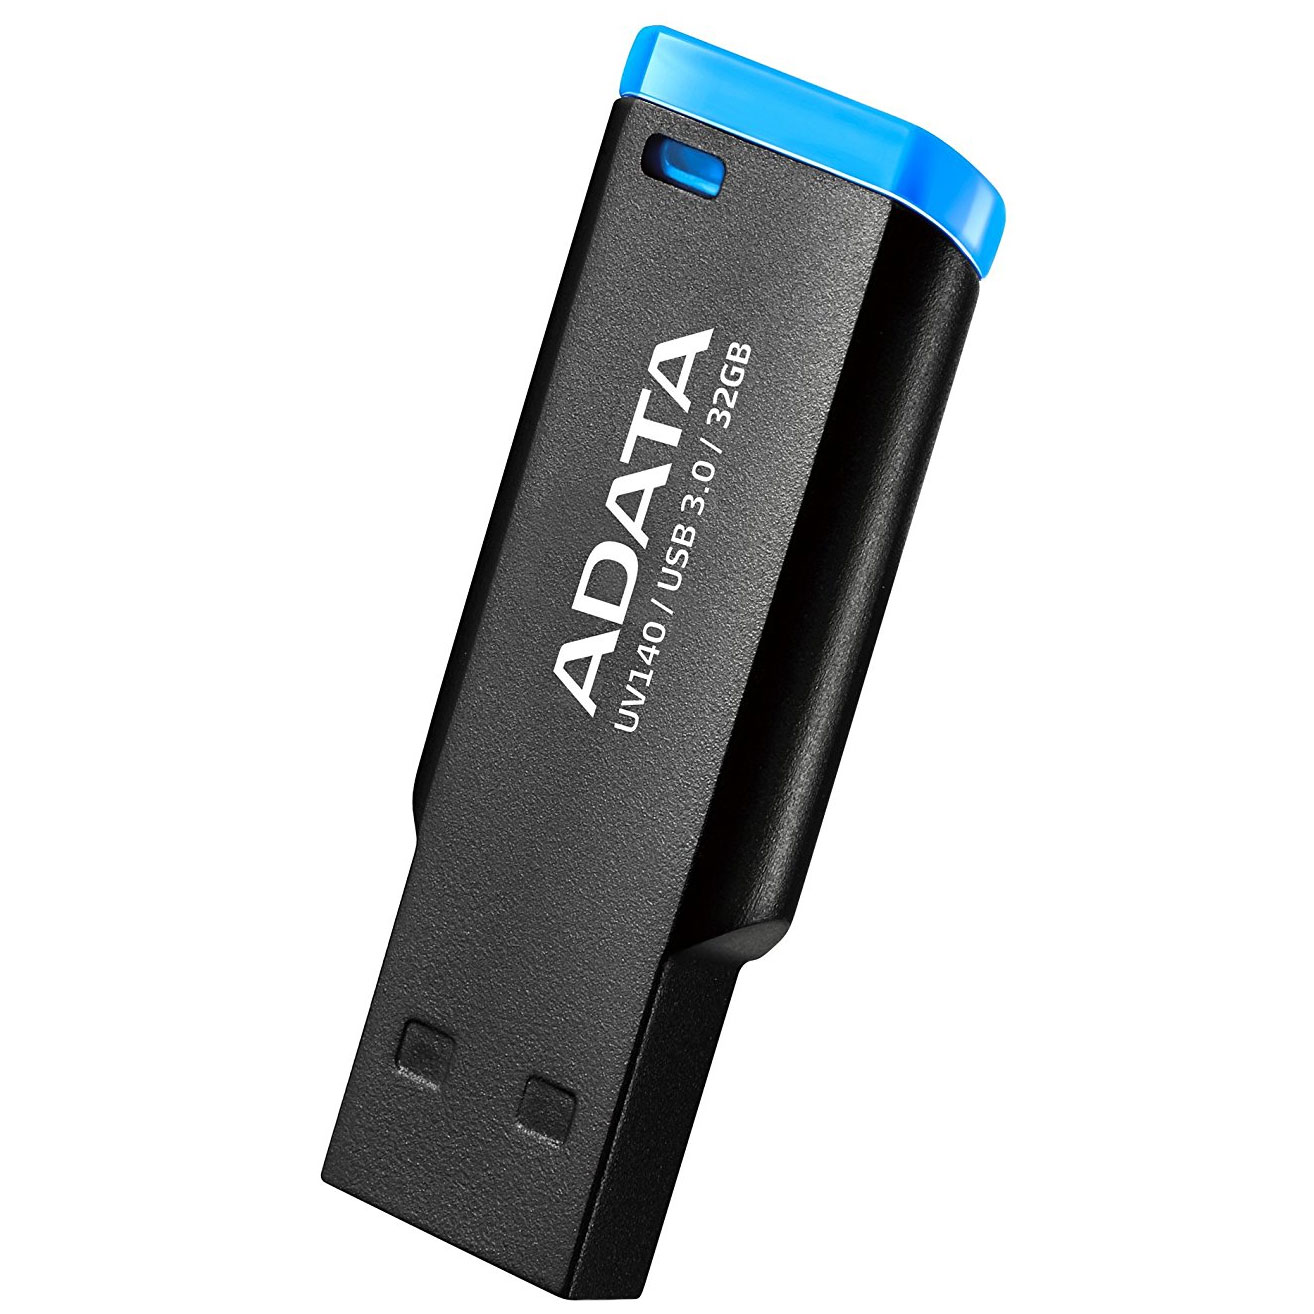  Memorie USB A-DATA AUV140-32G-RBE, 32GB, USB 3.0, Negru 